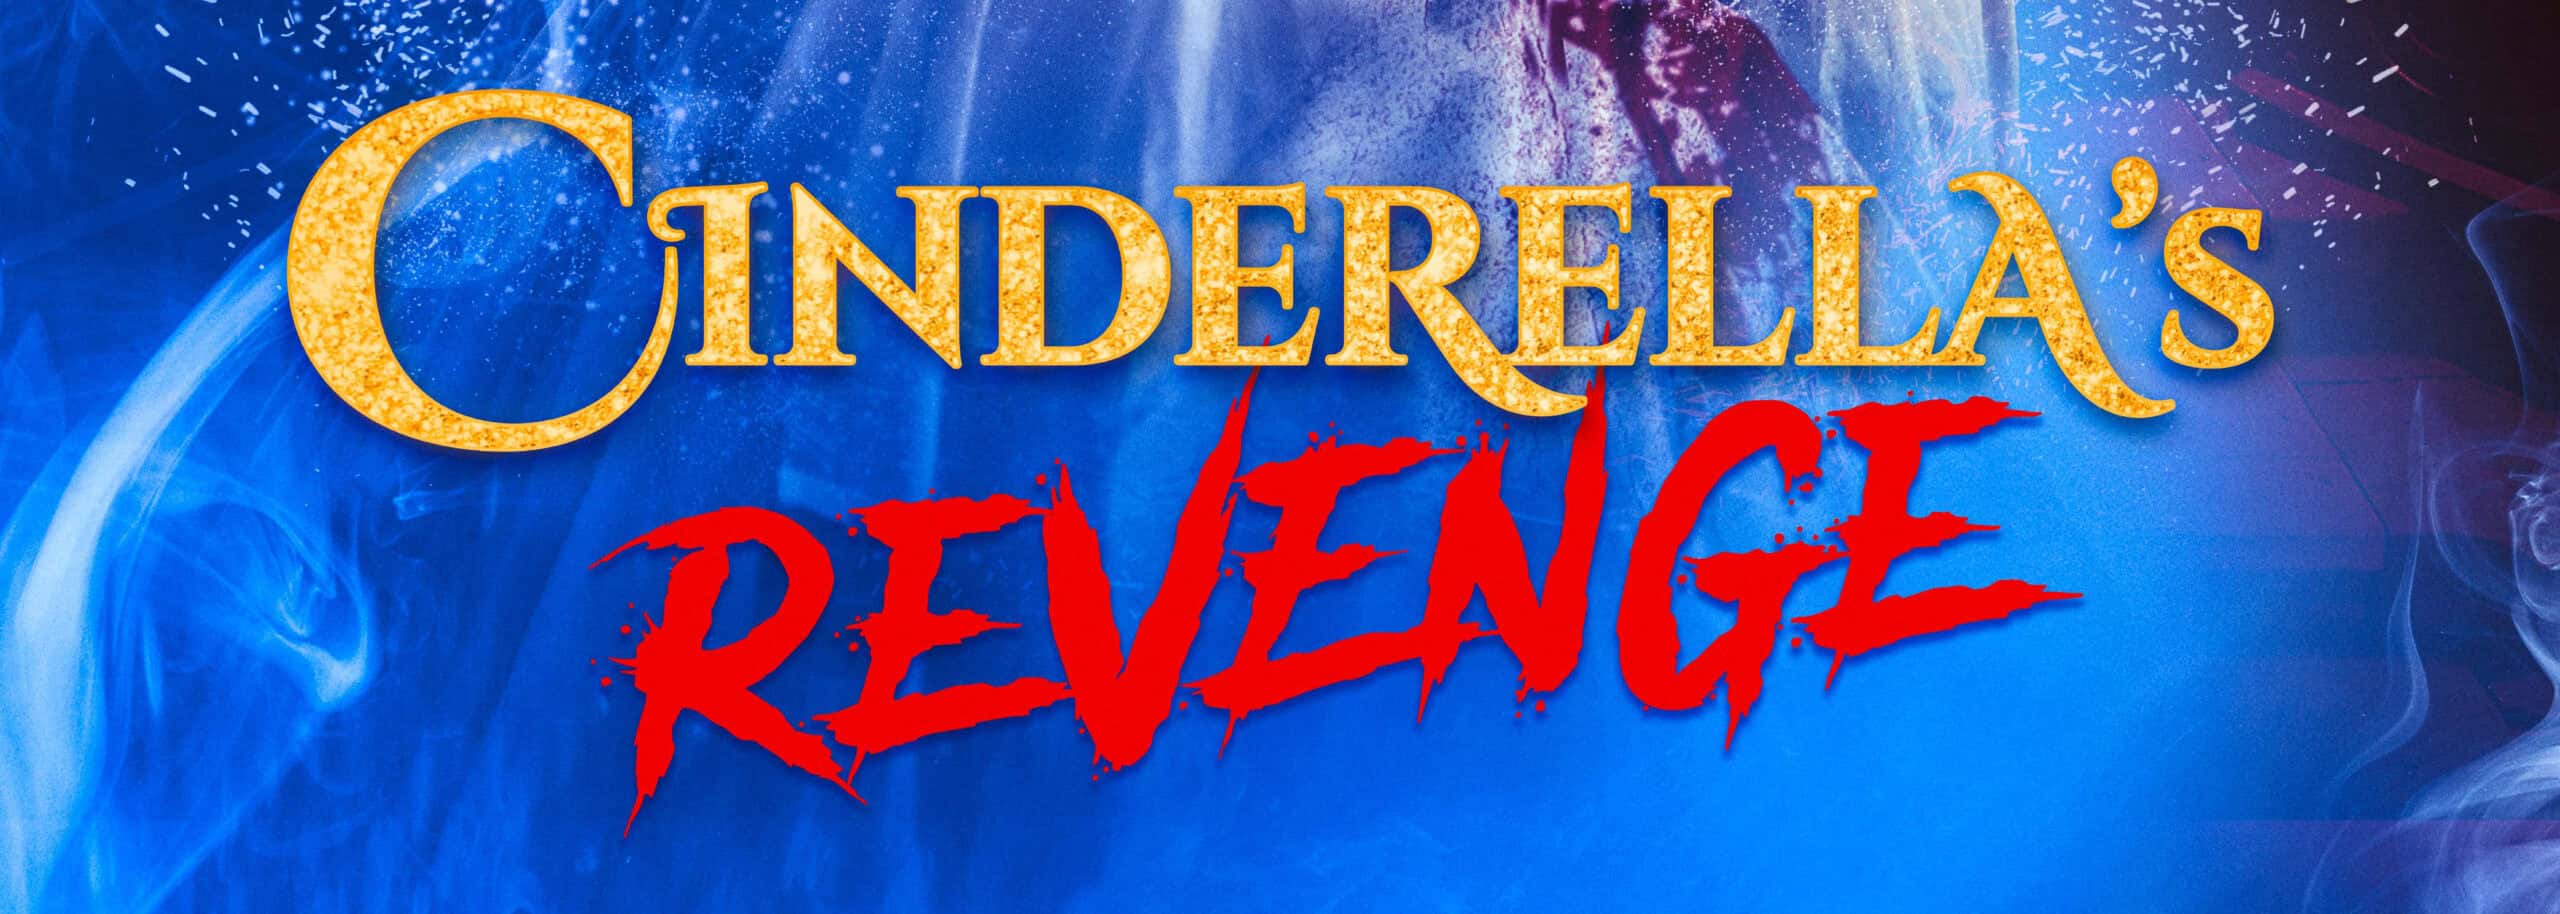 Cinderella’s Revenge Review